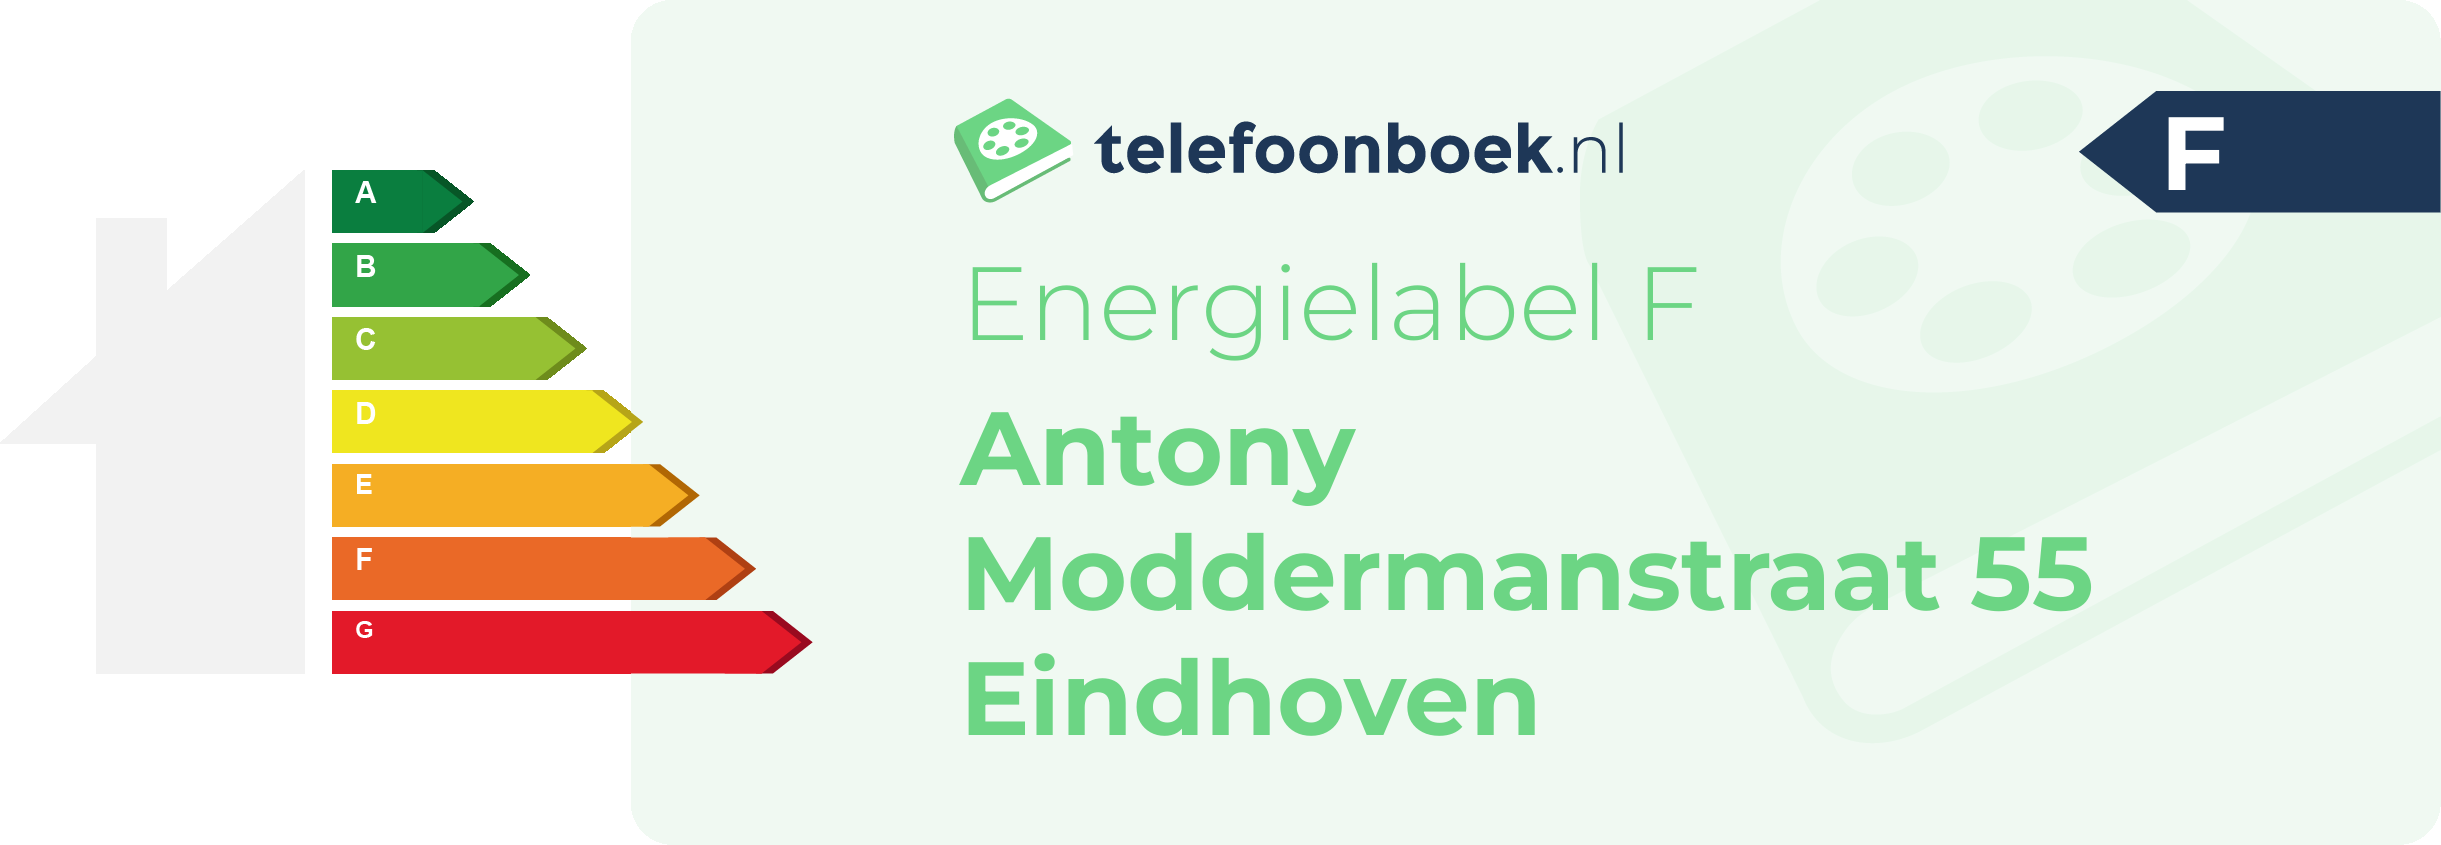 Energielabel Antony Moddermanstraat 55 Eindhoven